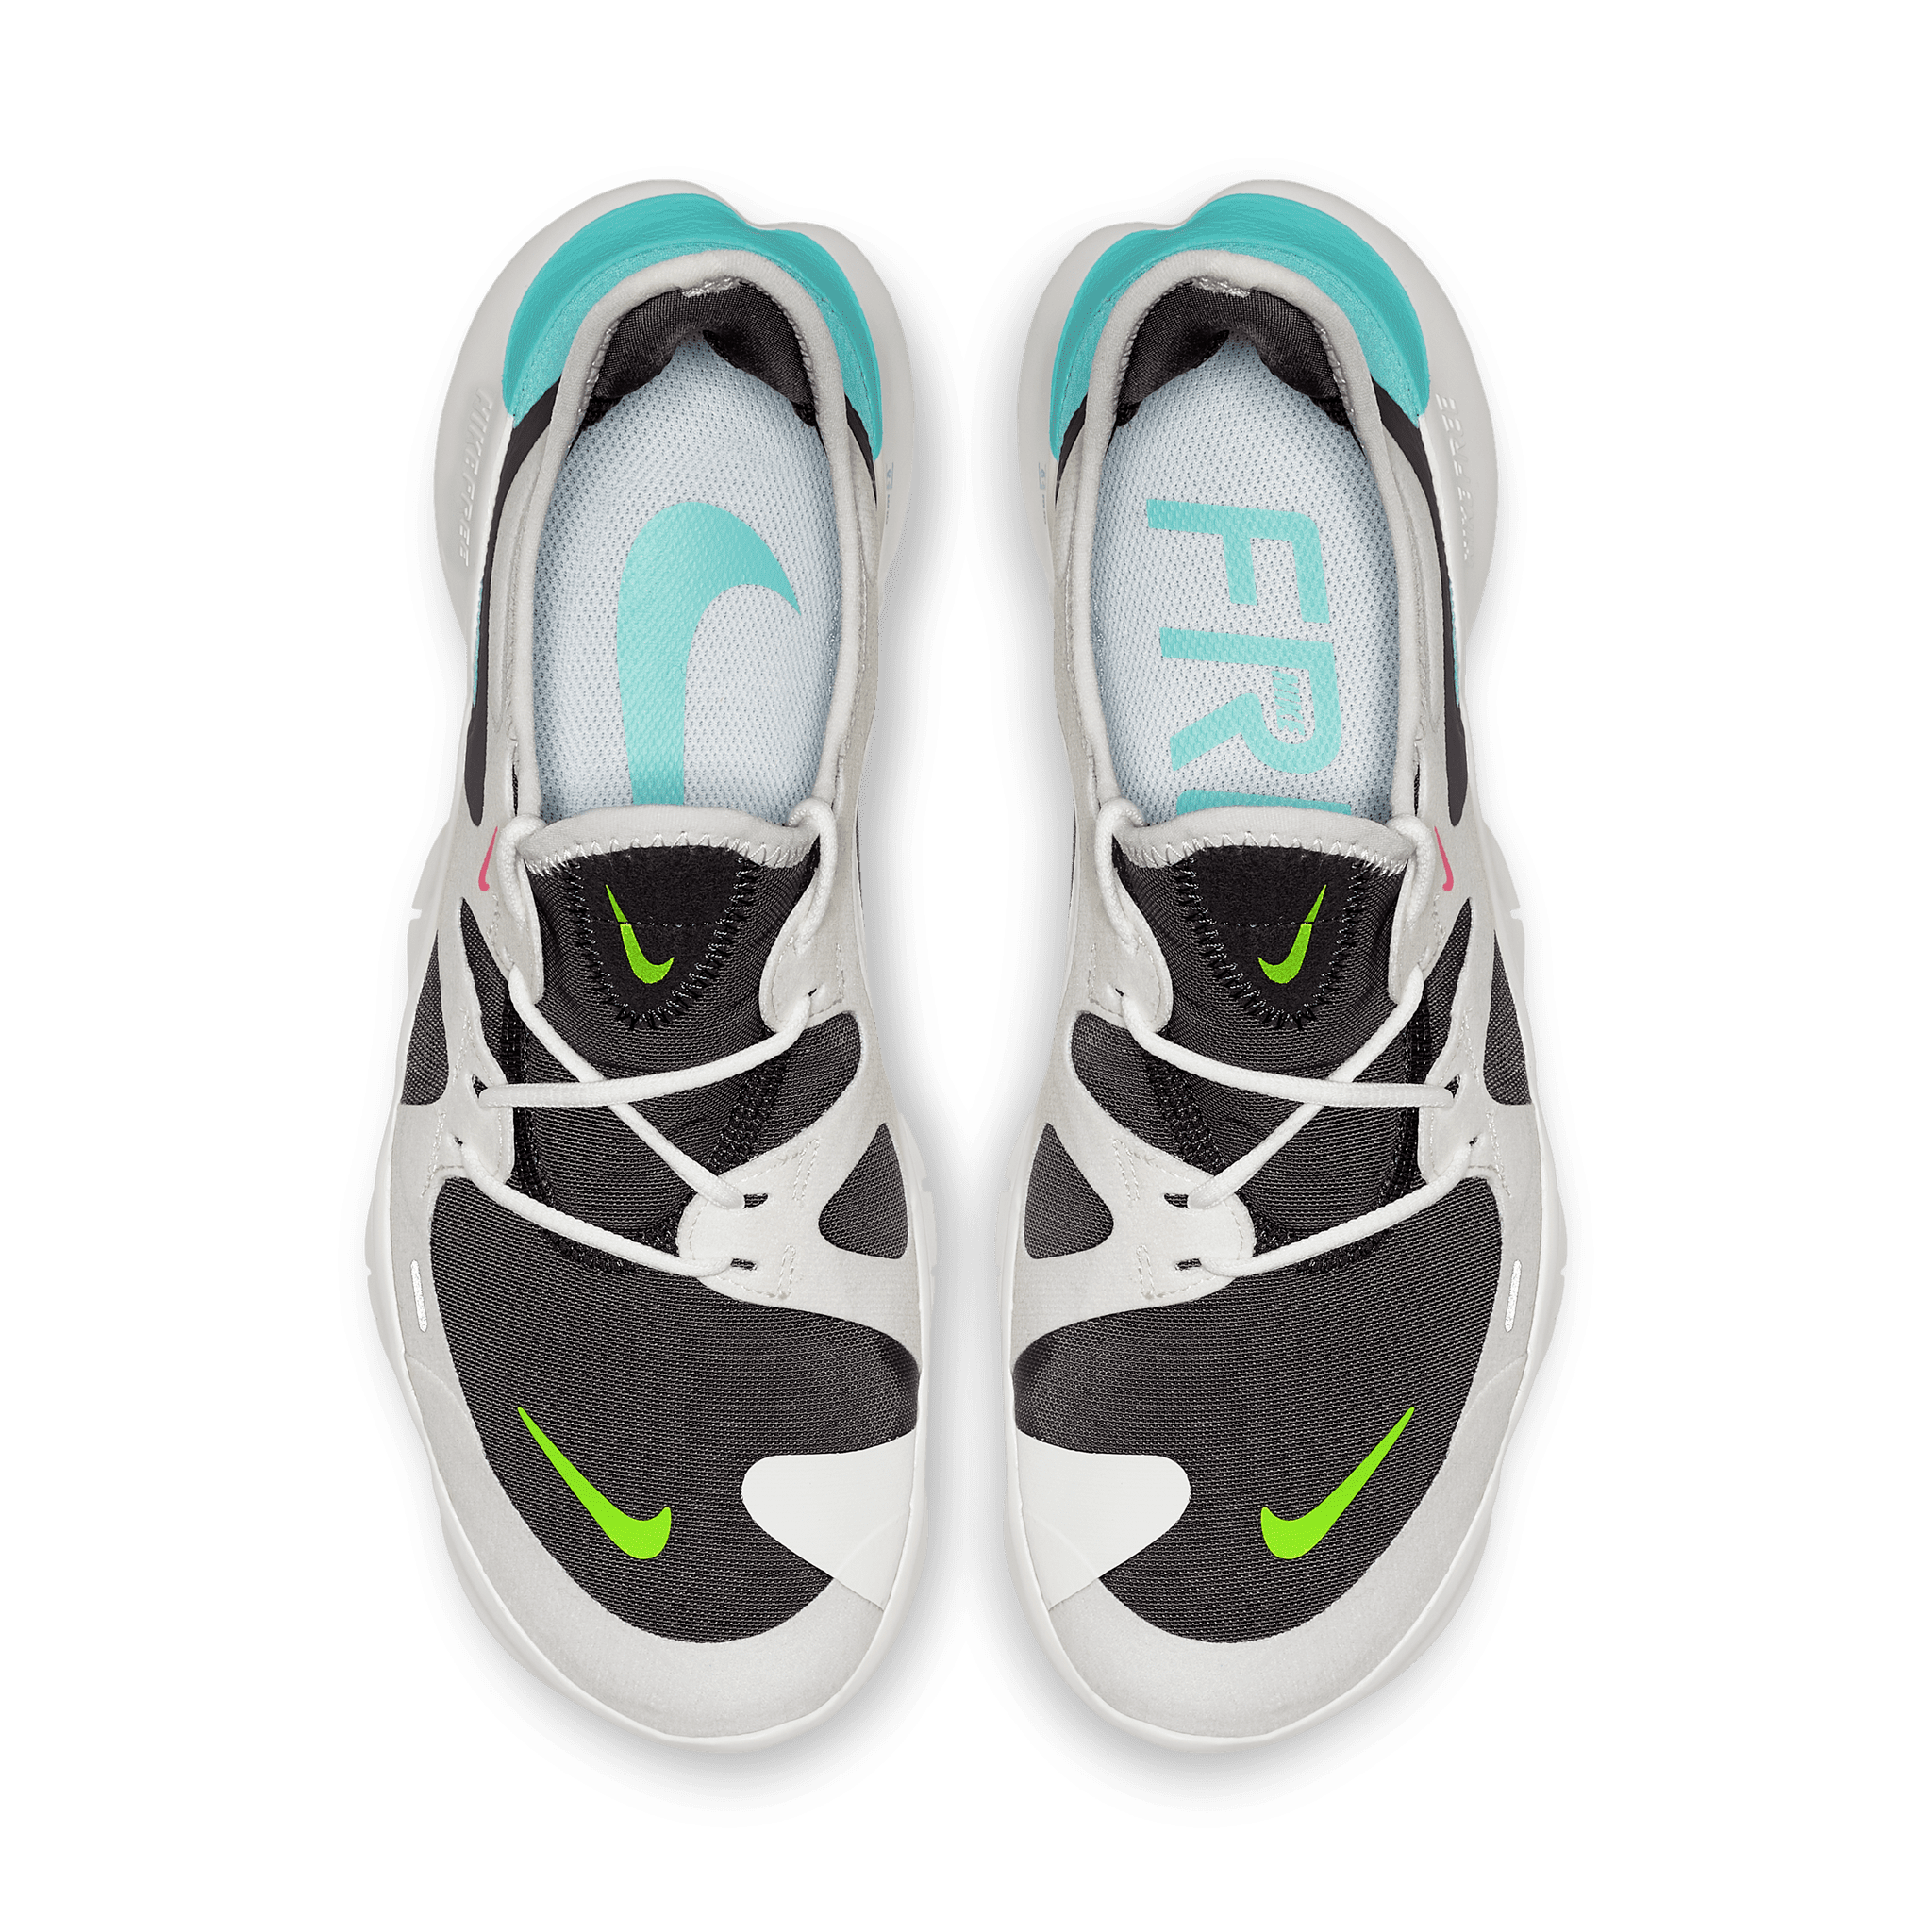 Mala suerte altura debajo Nike Free 5.0 Running Shoe 2019 | POPSUGAR Fitness